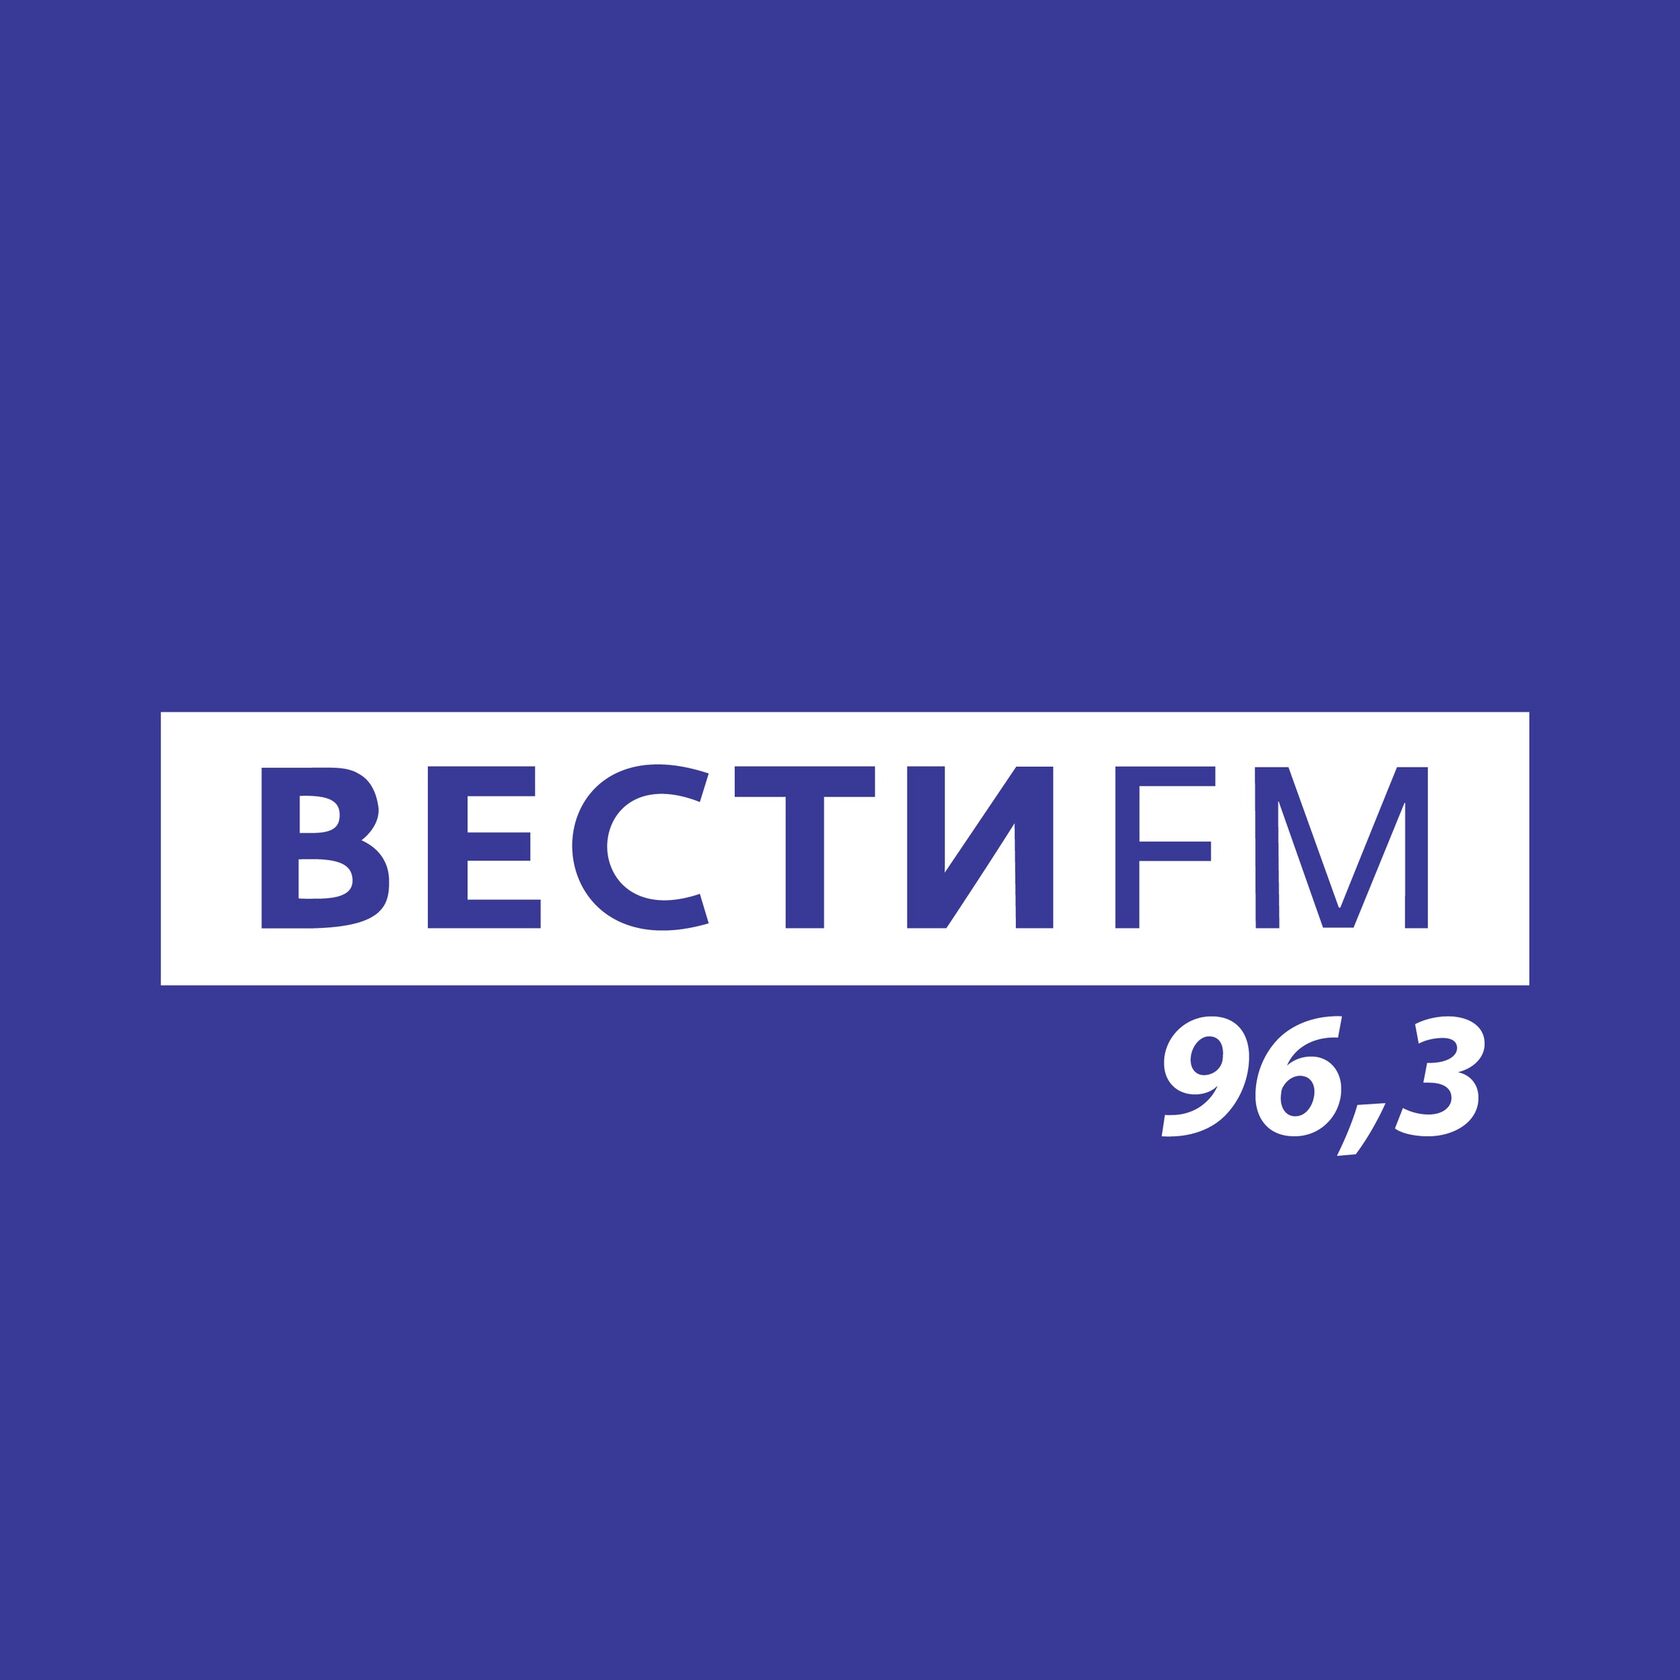 Dtcnb av. Вести ФМ. Вести ФМ лого. Логотип радиостанции вести ФМ. Вести логотип.